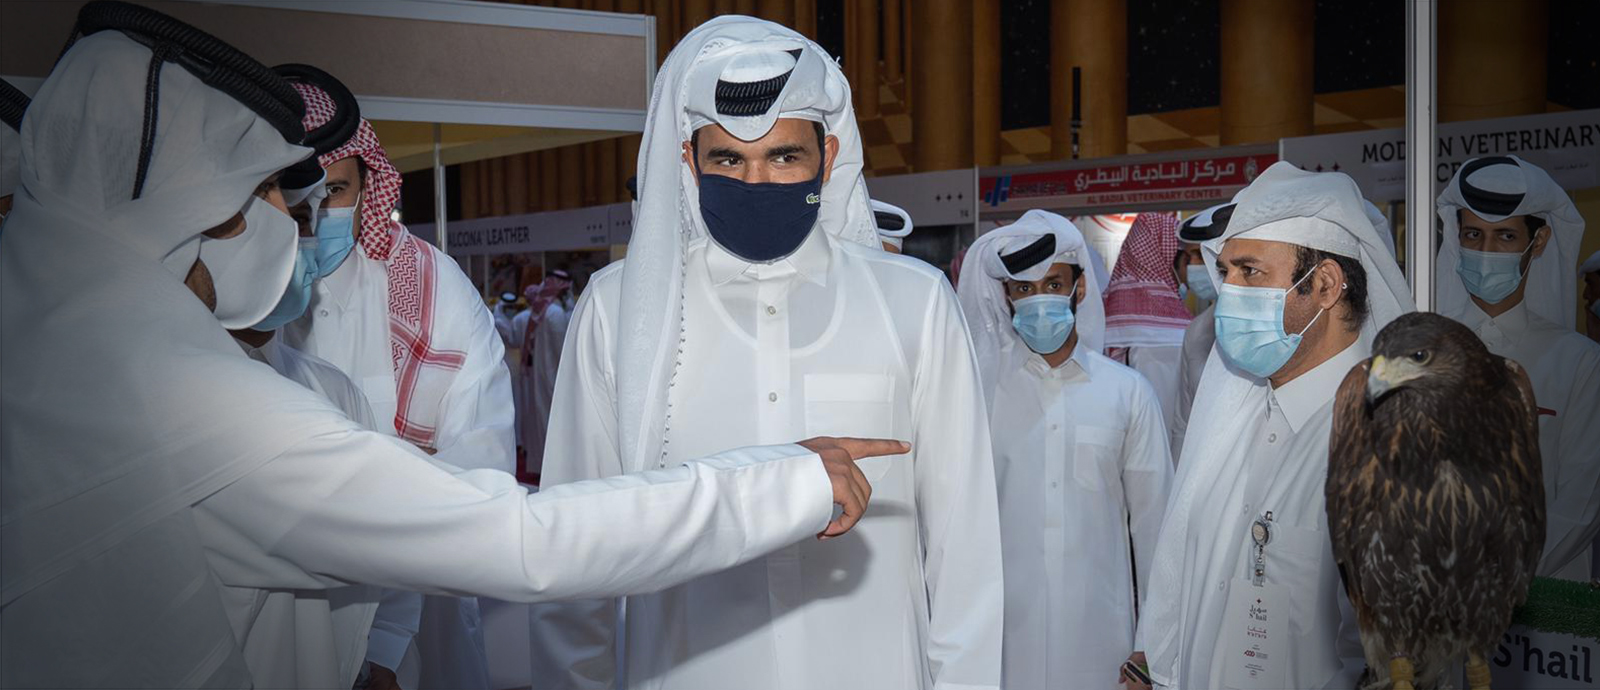 H.E .Sheikh Joaan bin Hamad Al Thani visits S’hail 2020